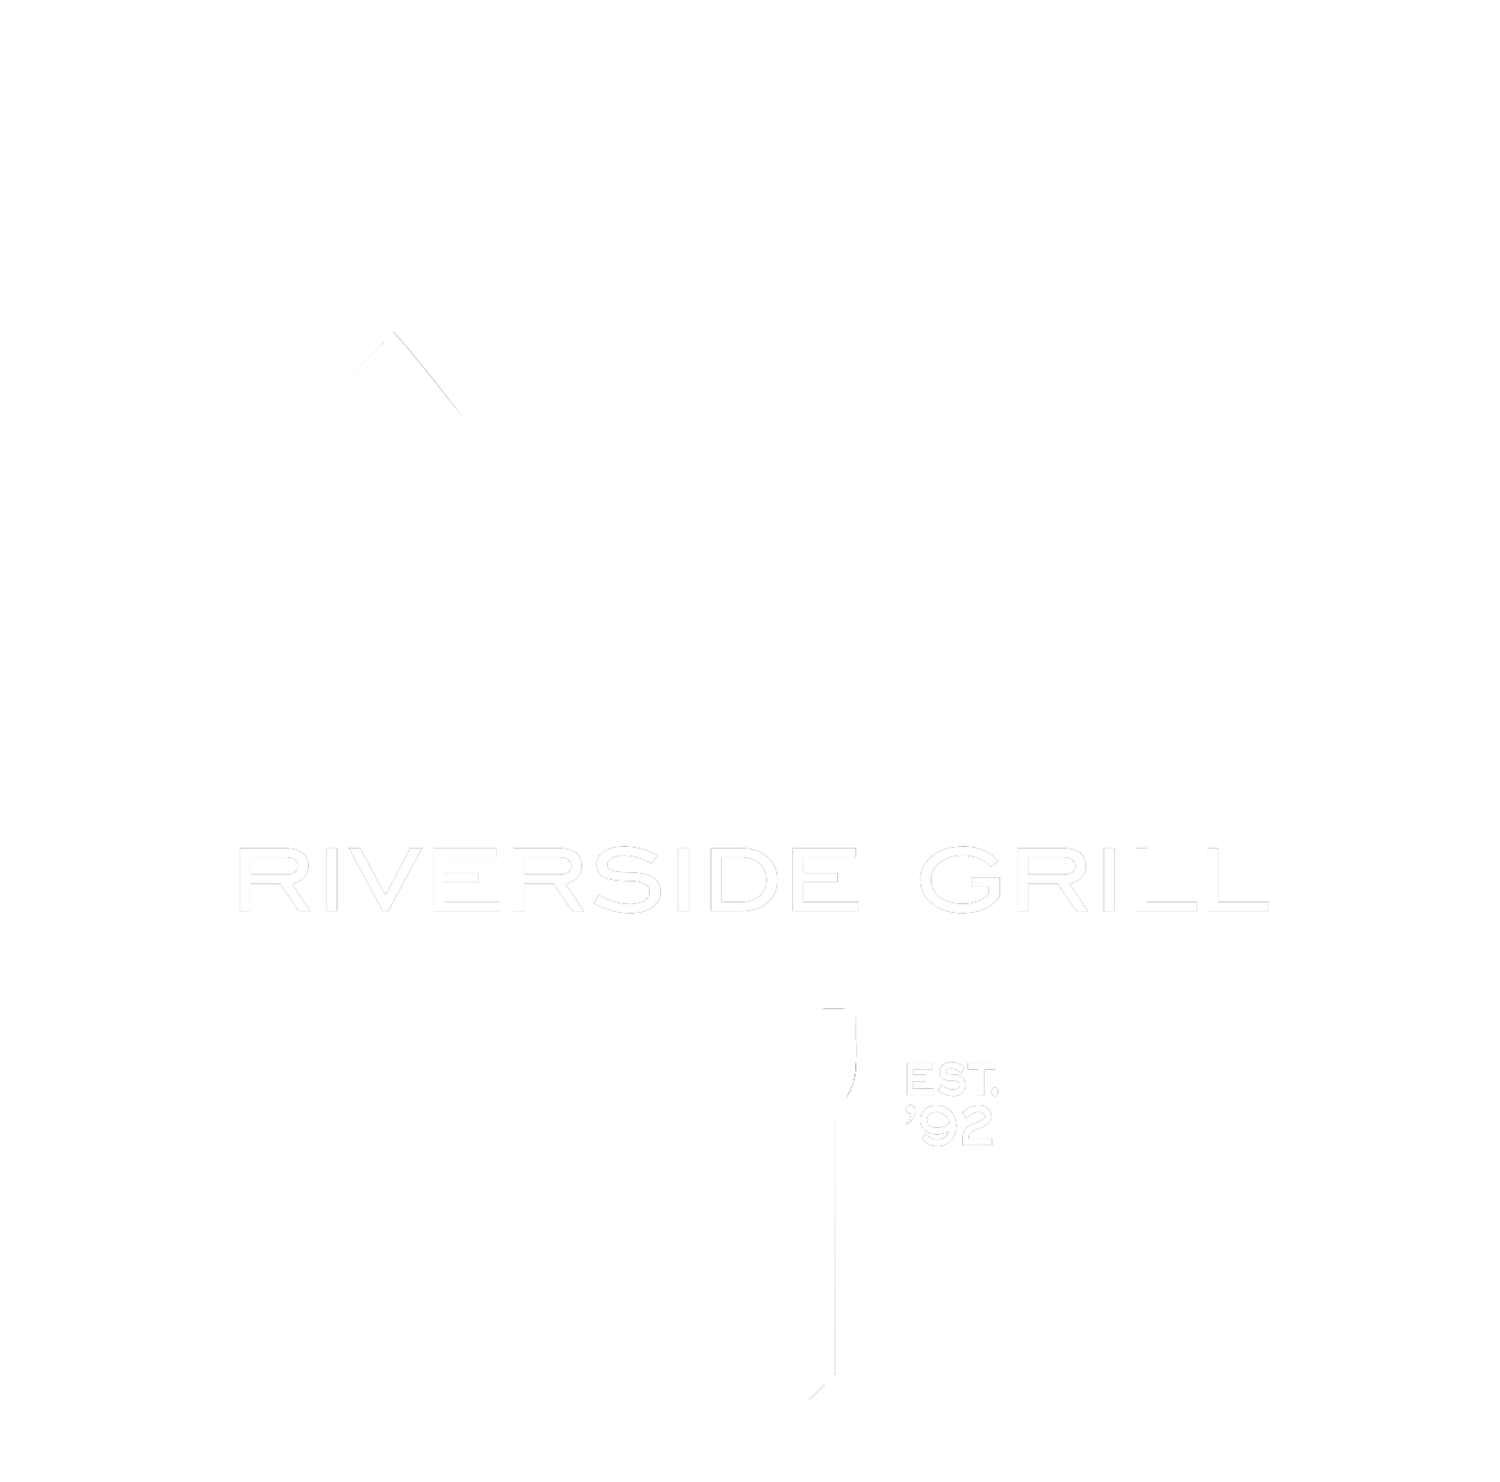 Nick's Riverside Grill